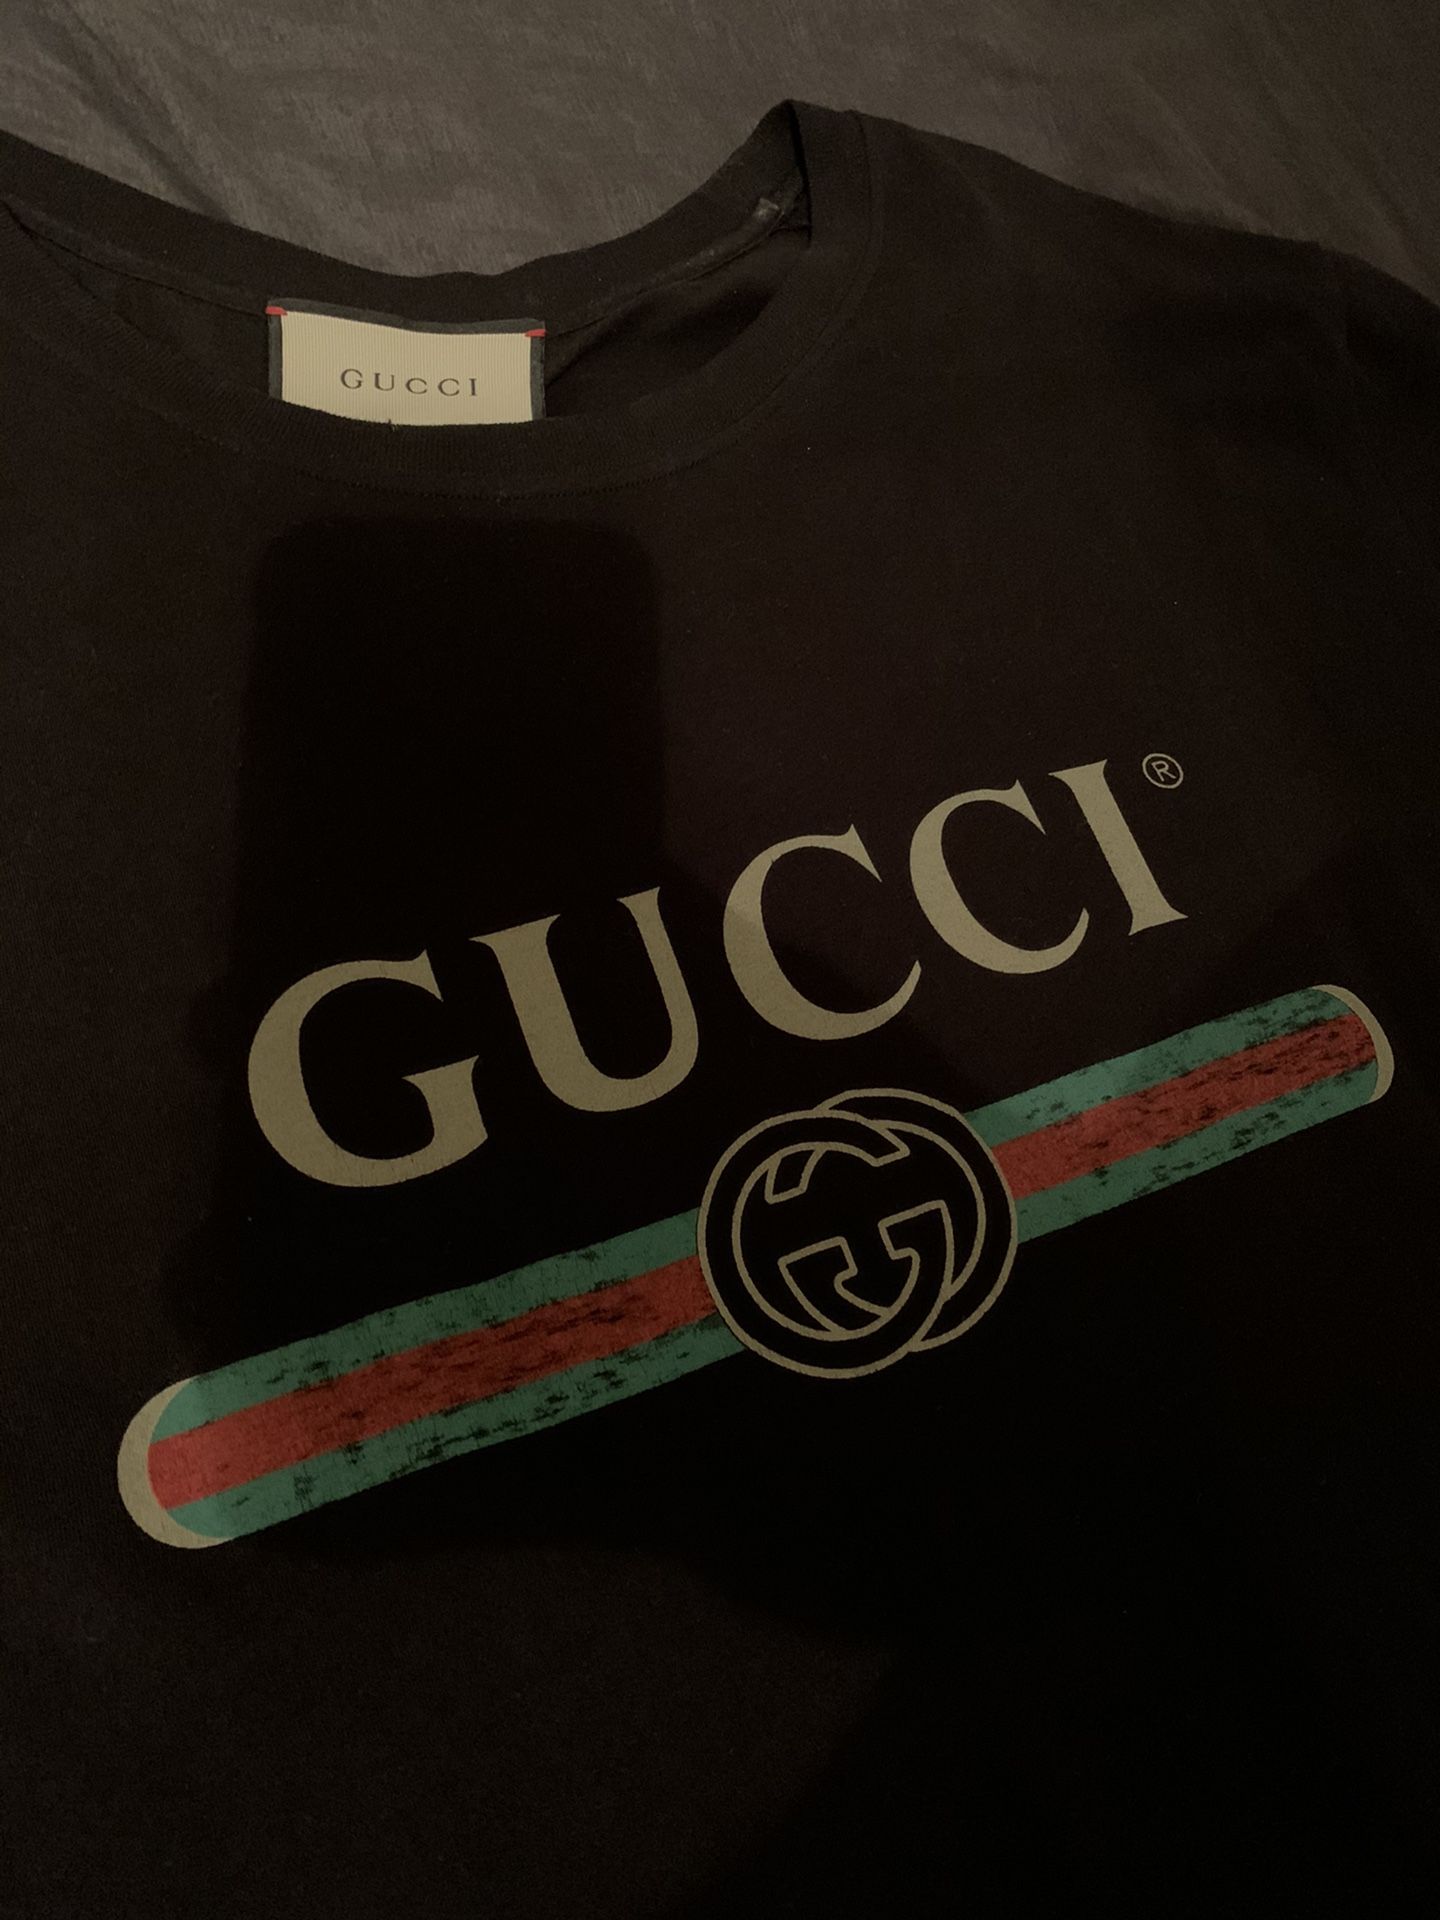 Gucci t shirt 1000% authentic size XXL but fits XL